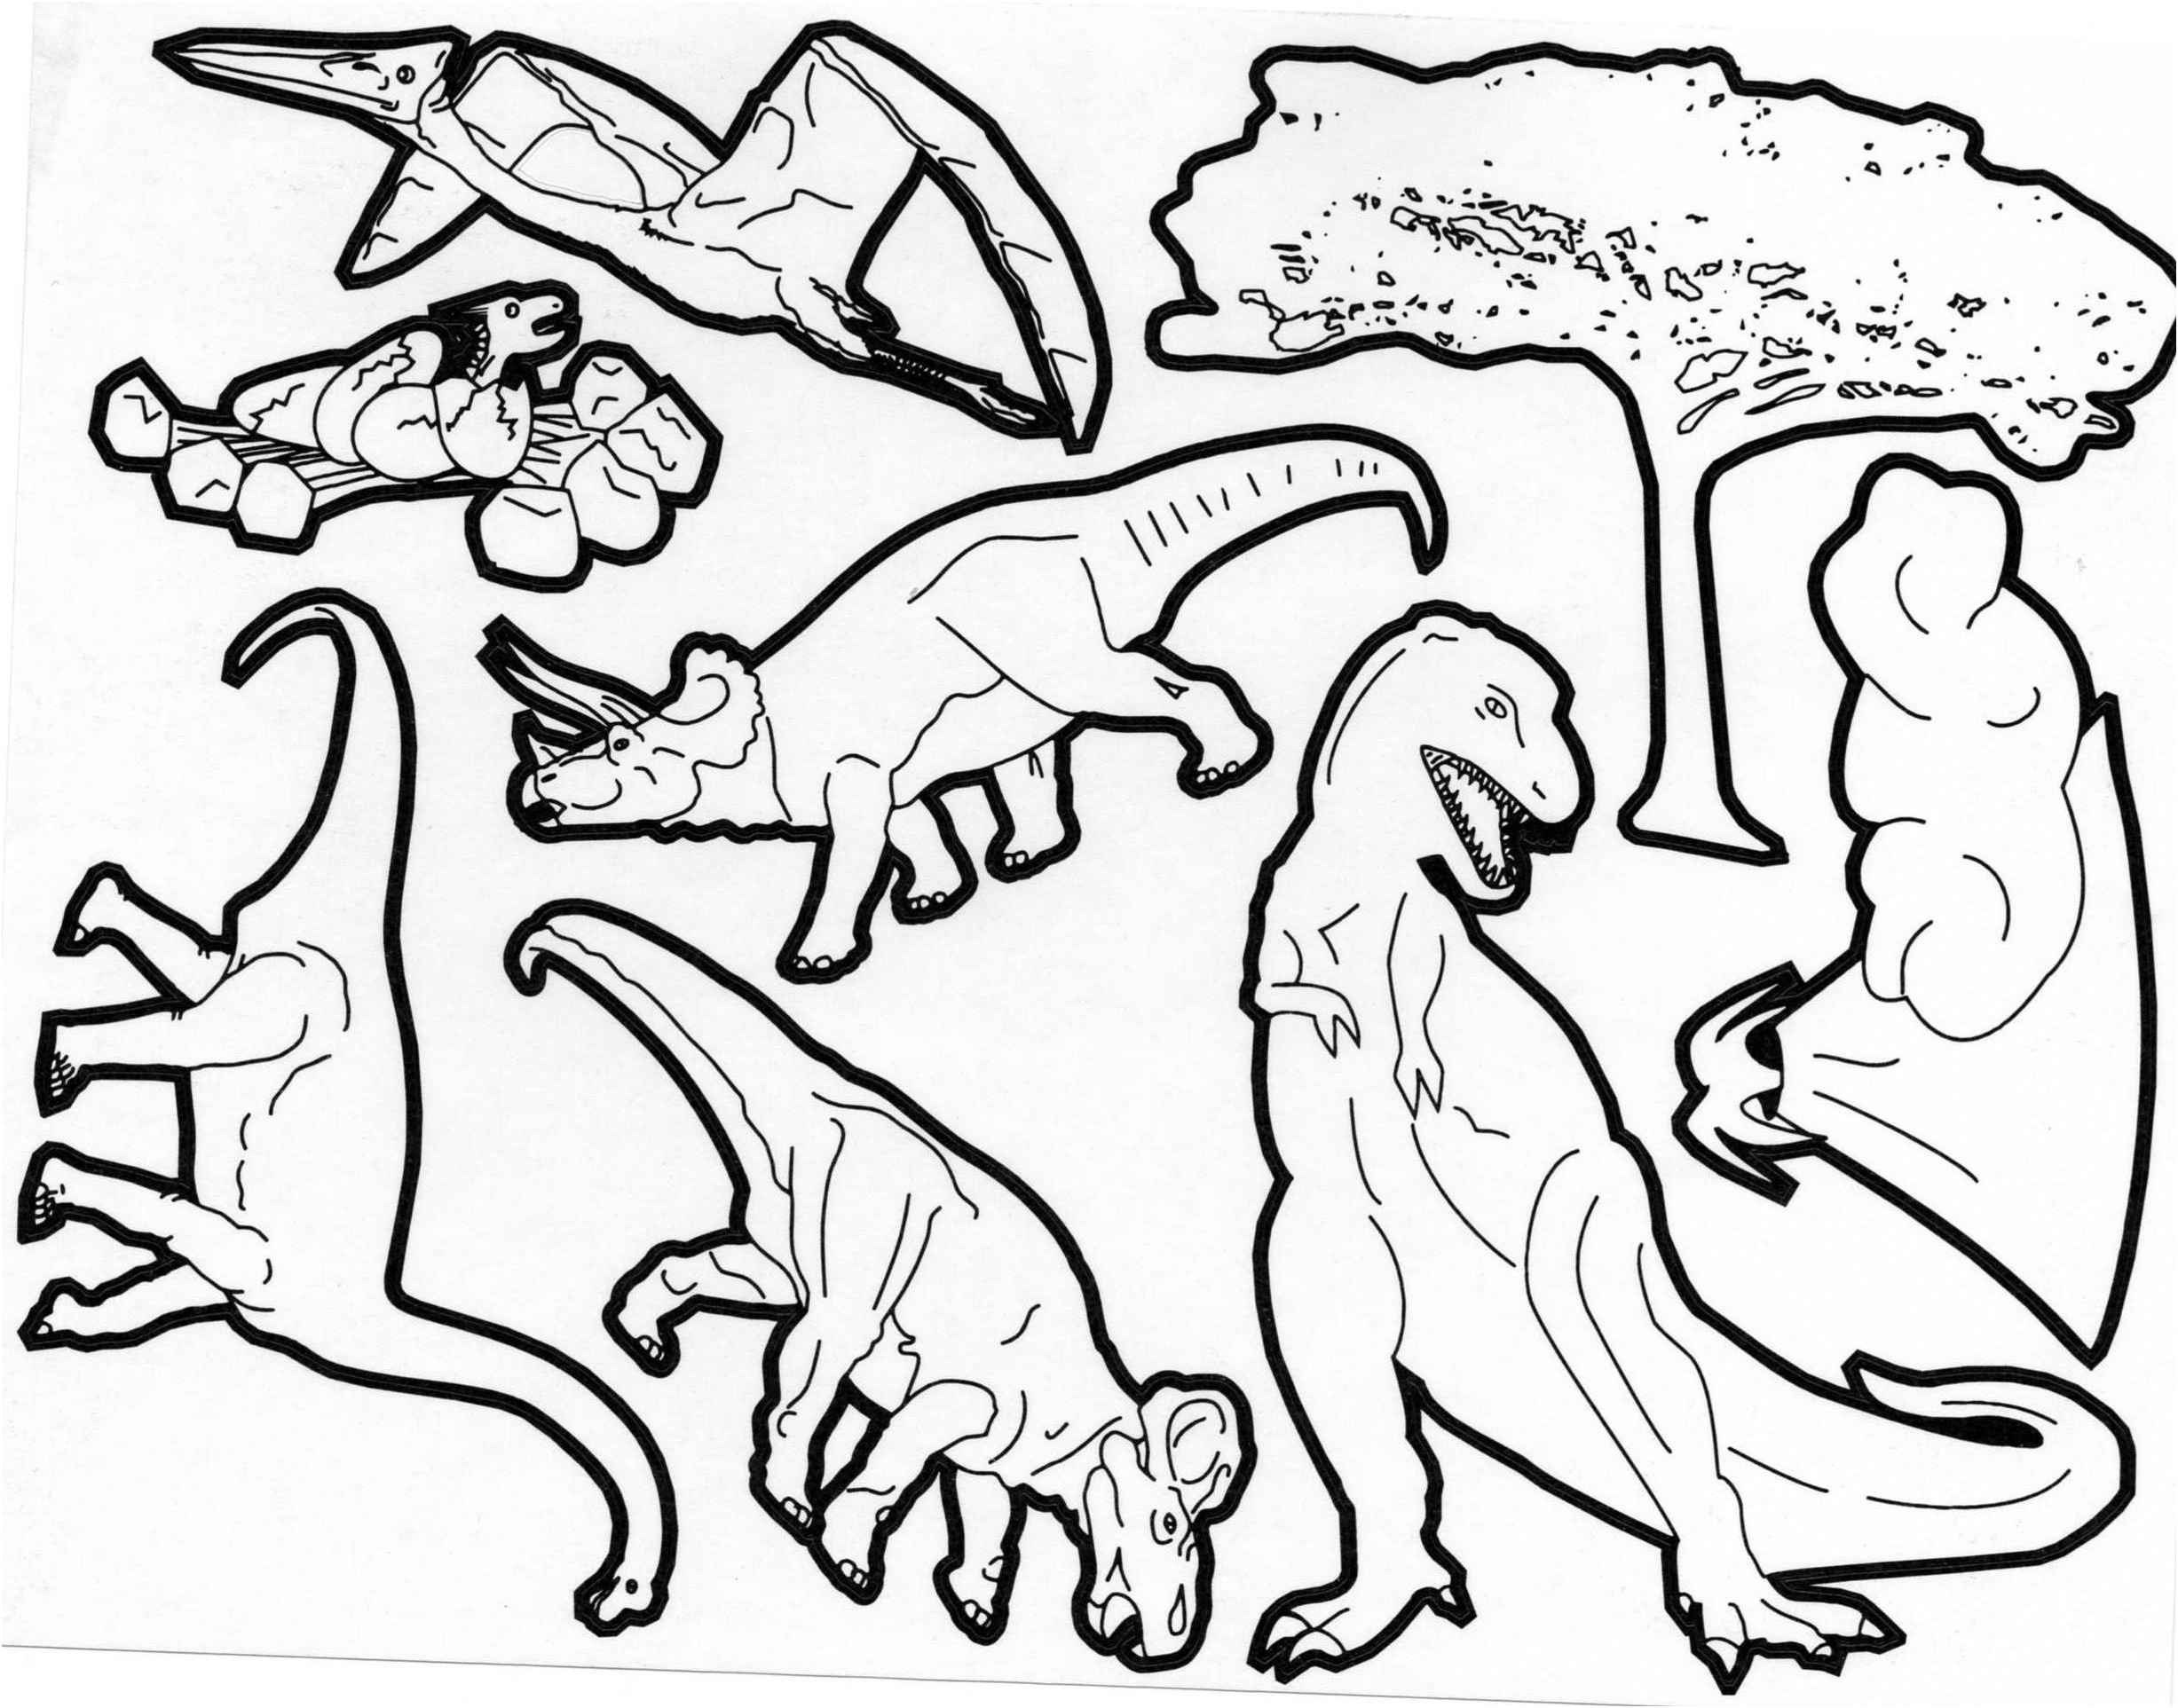 dessin a colorier dinosaure king